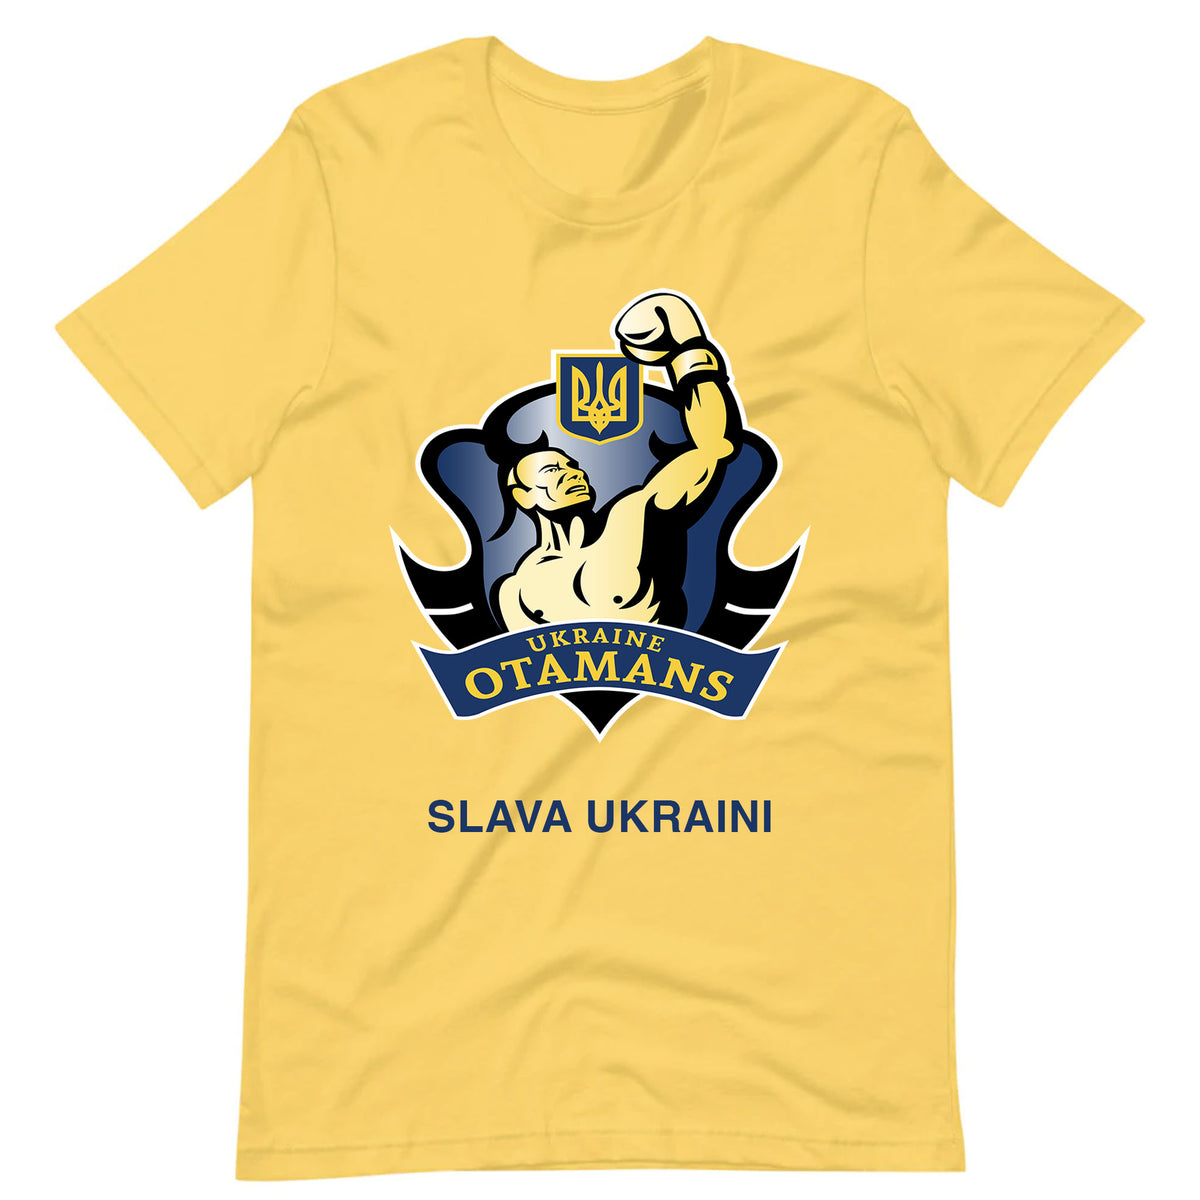 UKRAINIAN OTAMAN SHIRT